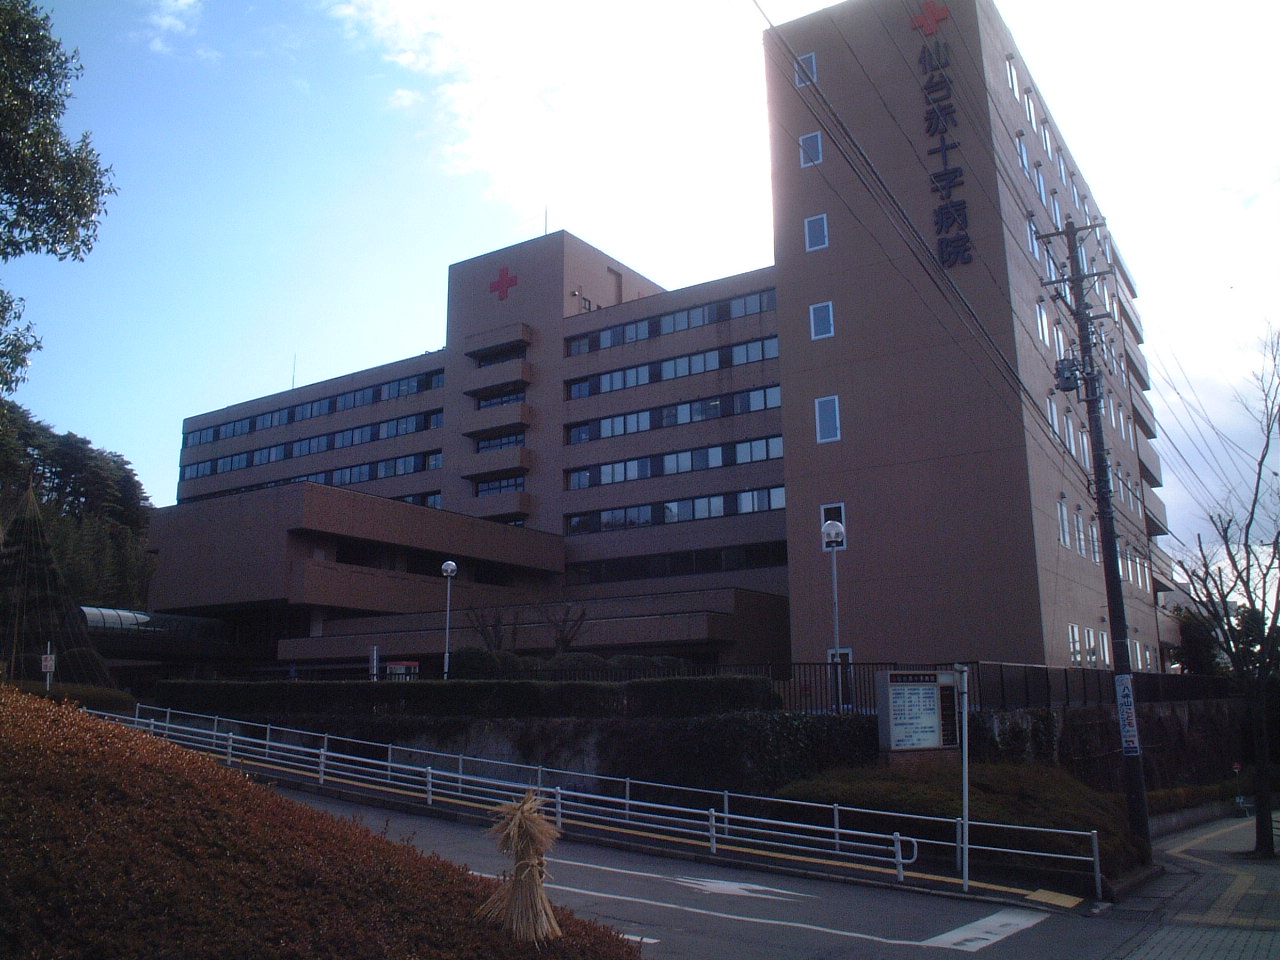 Hospital. 729m to the General Hospital Sendaisekijujibyoin (hospital)